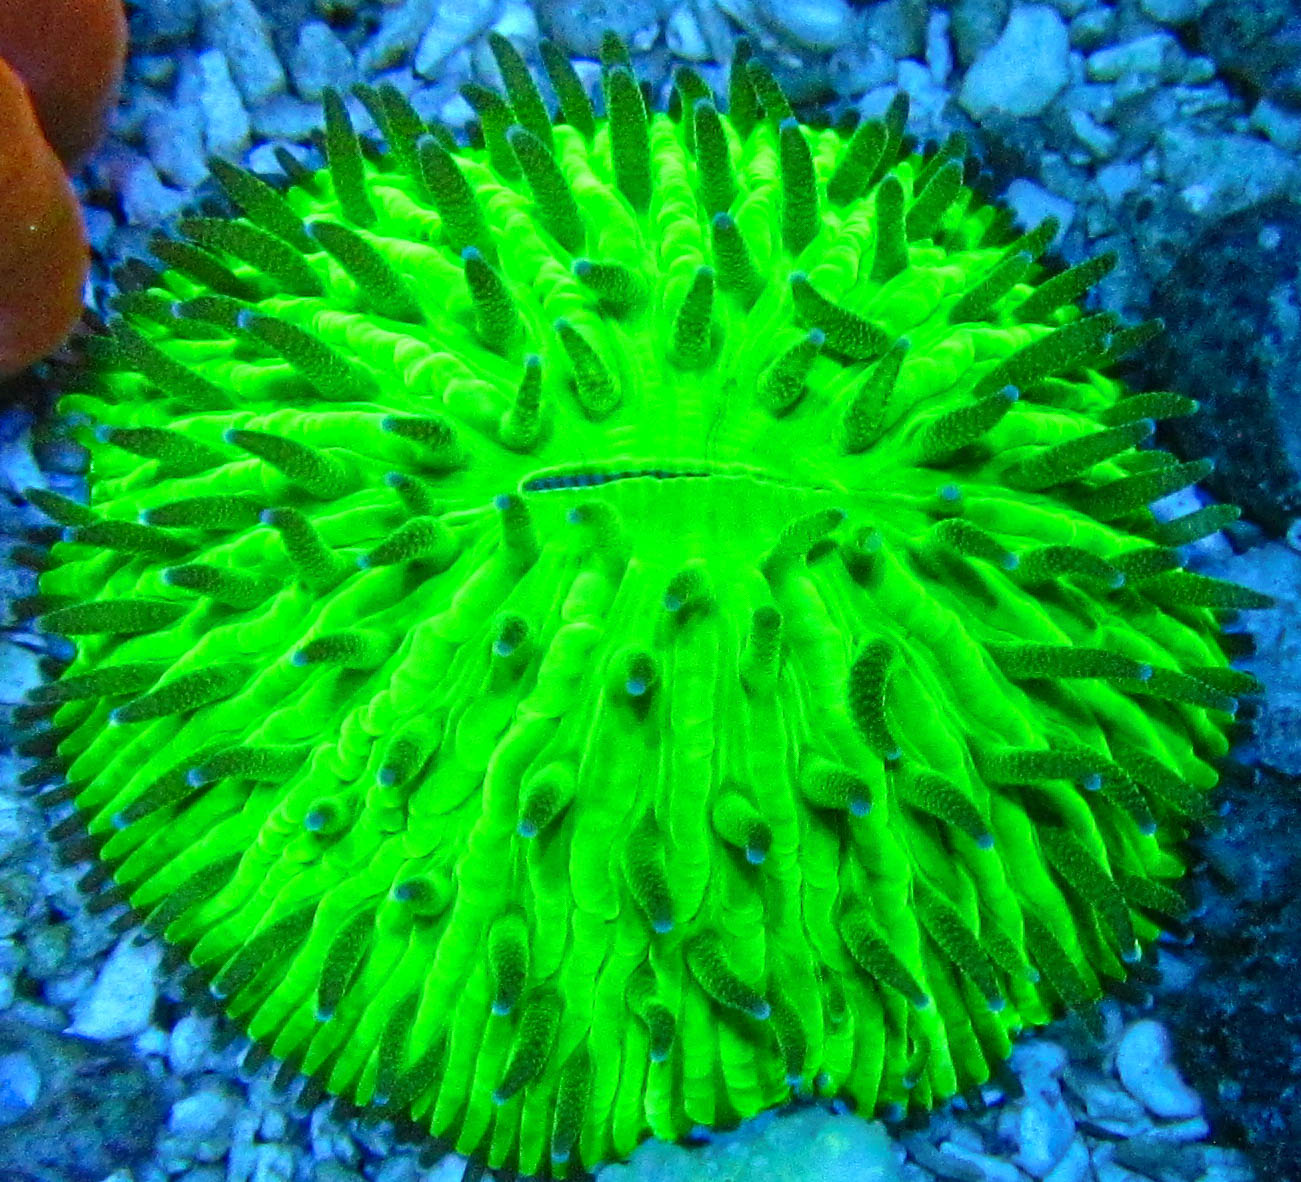 Aquacultured Neon Plate.jpg